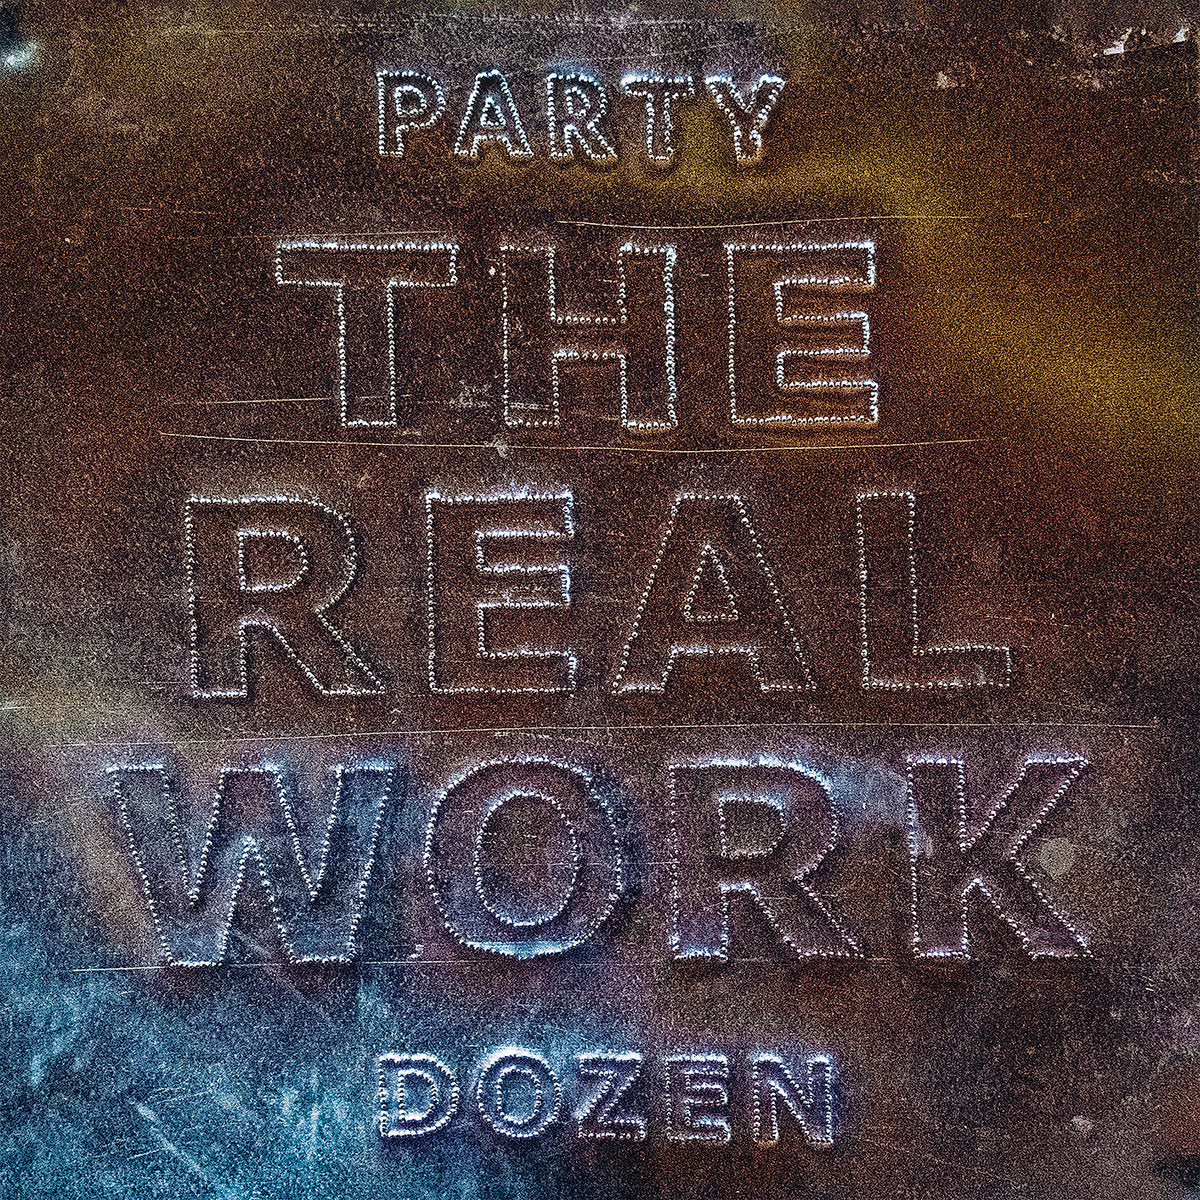 PARTY DOZEN 'THE REAL WORK'